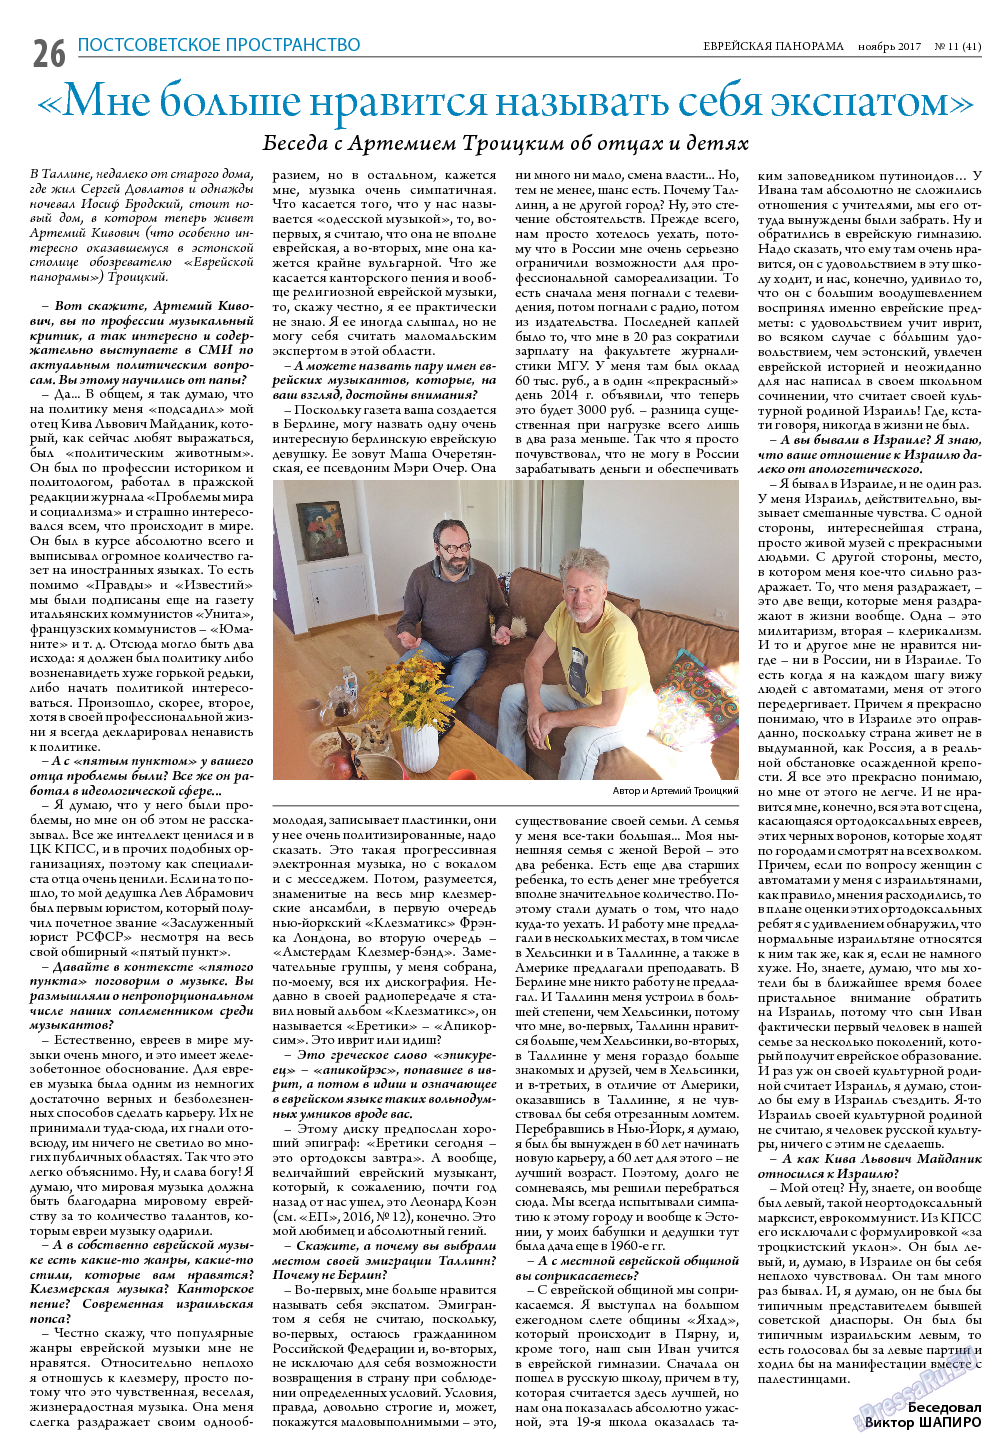 Еврейская панорама, газета. 2017 №11 стр.26